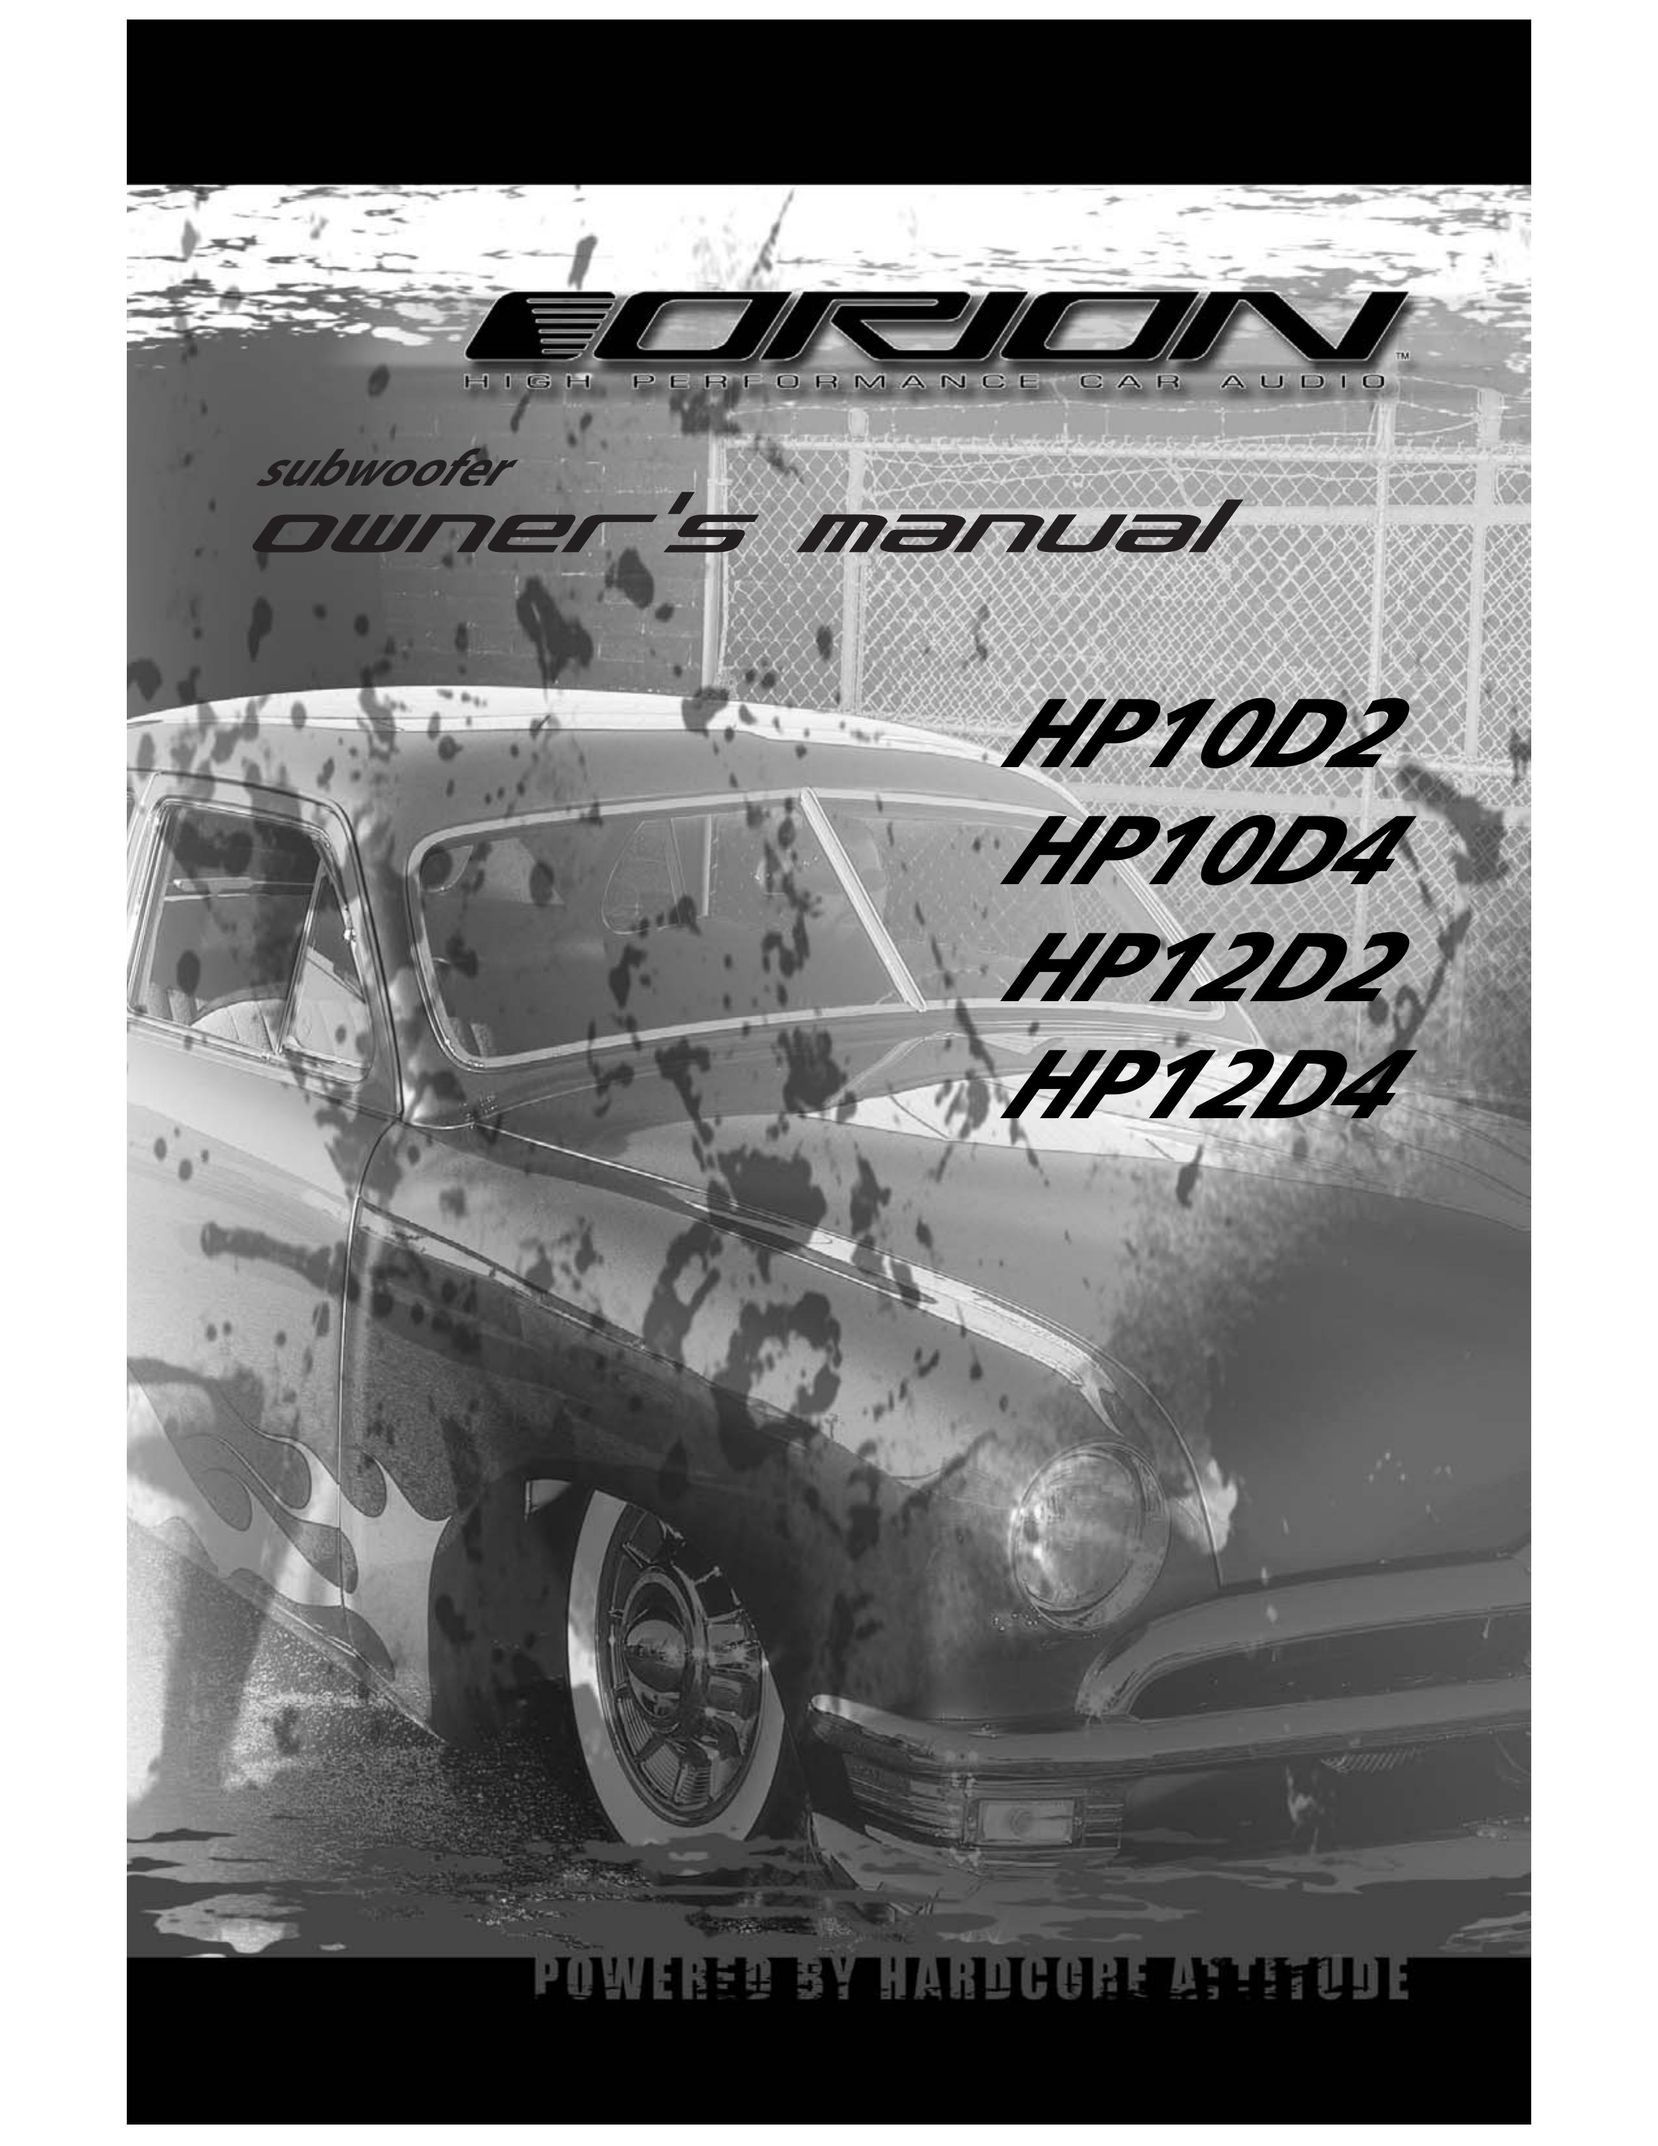 Orion Car Audio HP10D4 Speaker User Manual